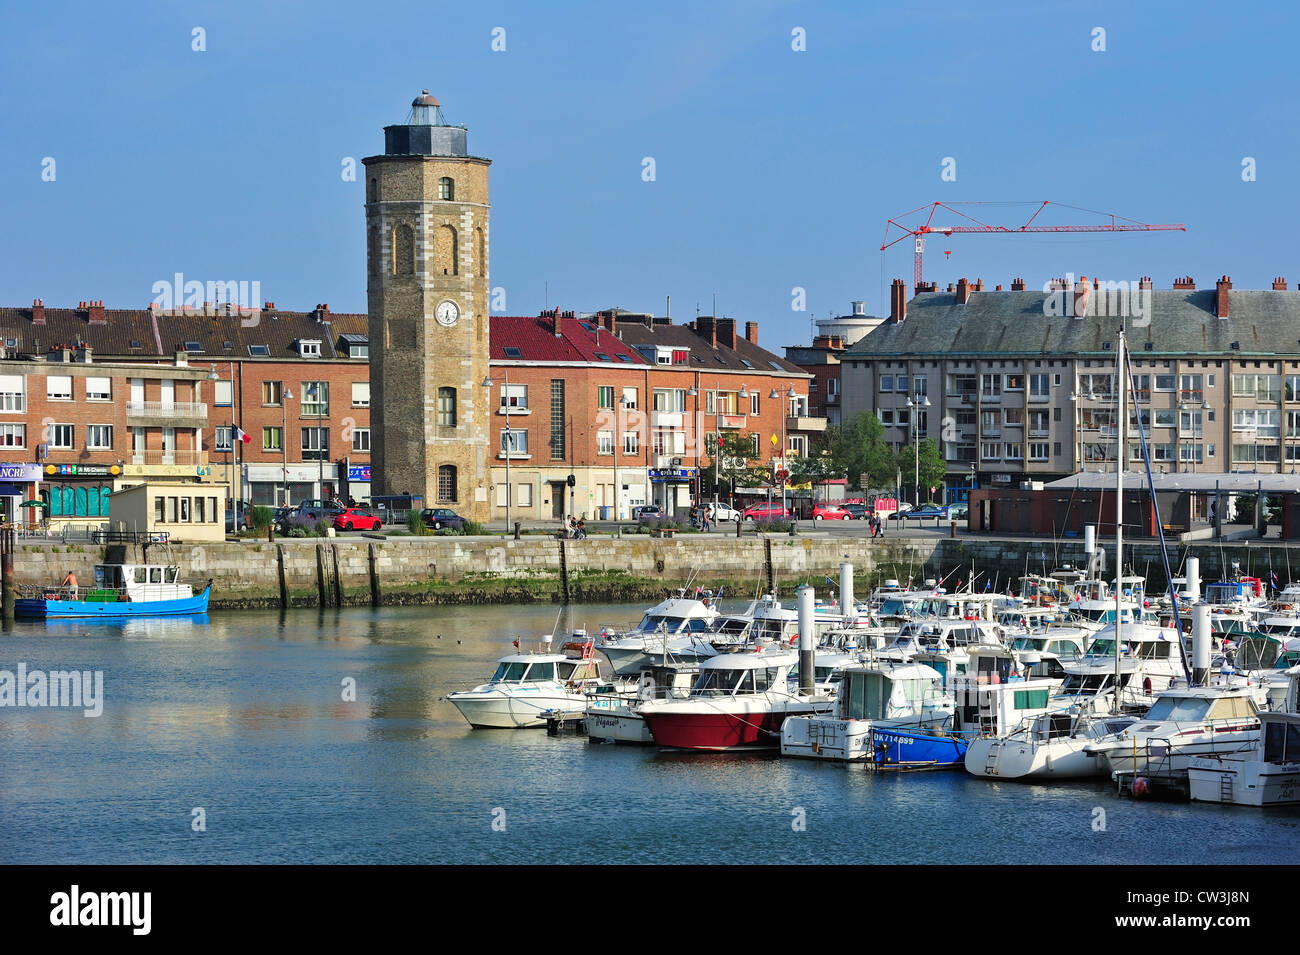 Il Tour du Leughenaer / bugiardo torre nel porto di Dunkerque / Dunkerque, Nord-Pas-de-Calais, Francia Foto Stock